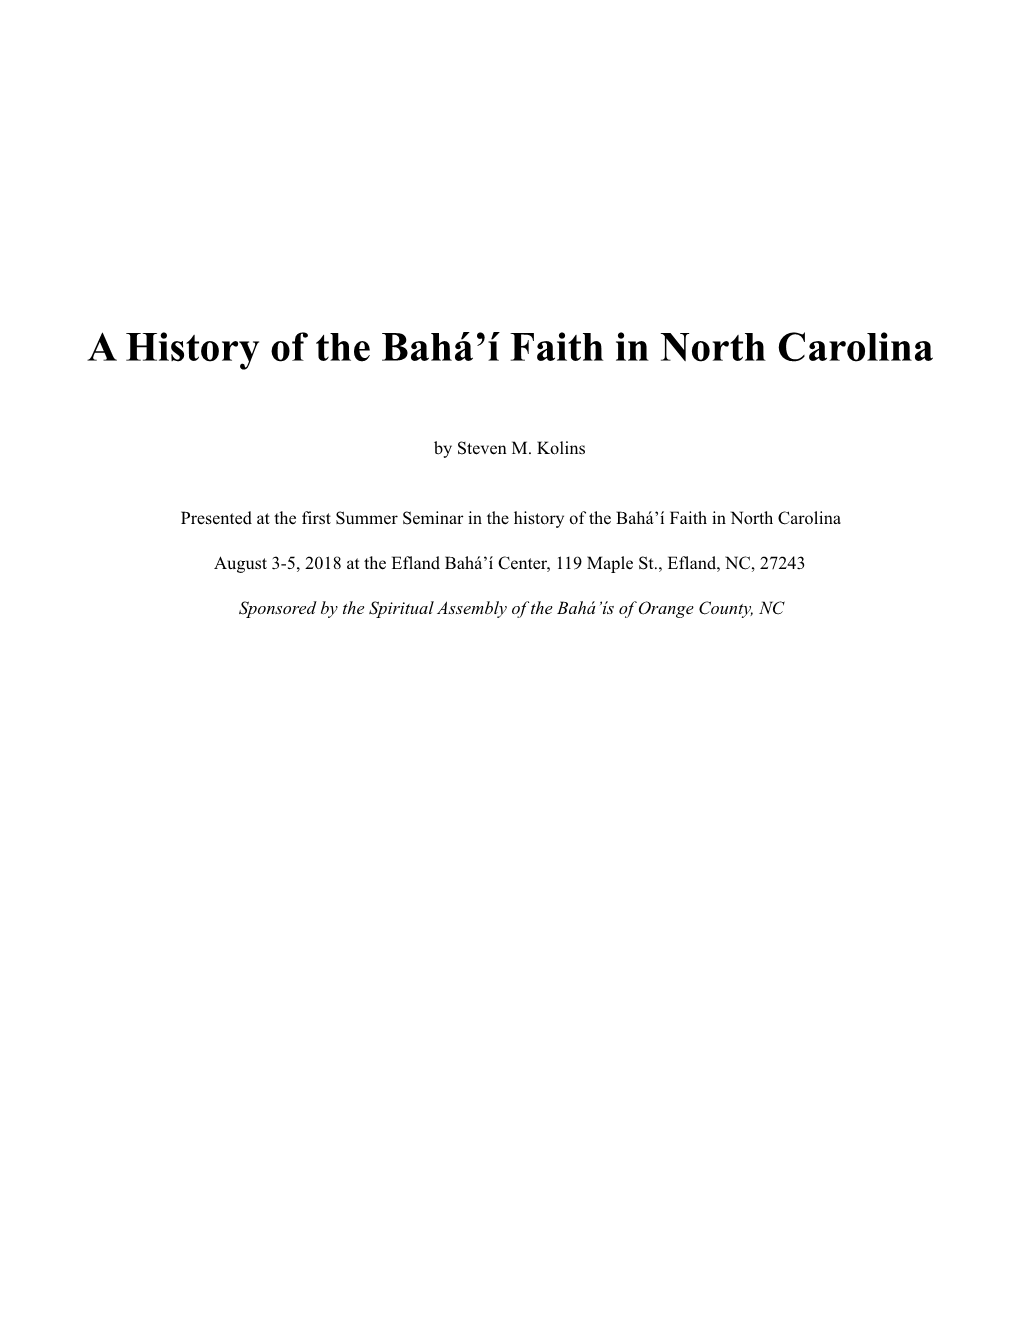 A History of Baha'i Faith and North Carolina(Reduced).Pages